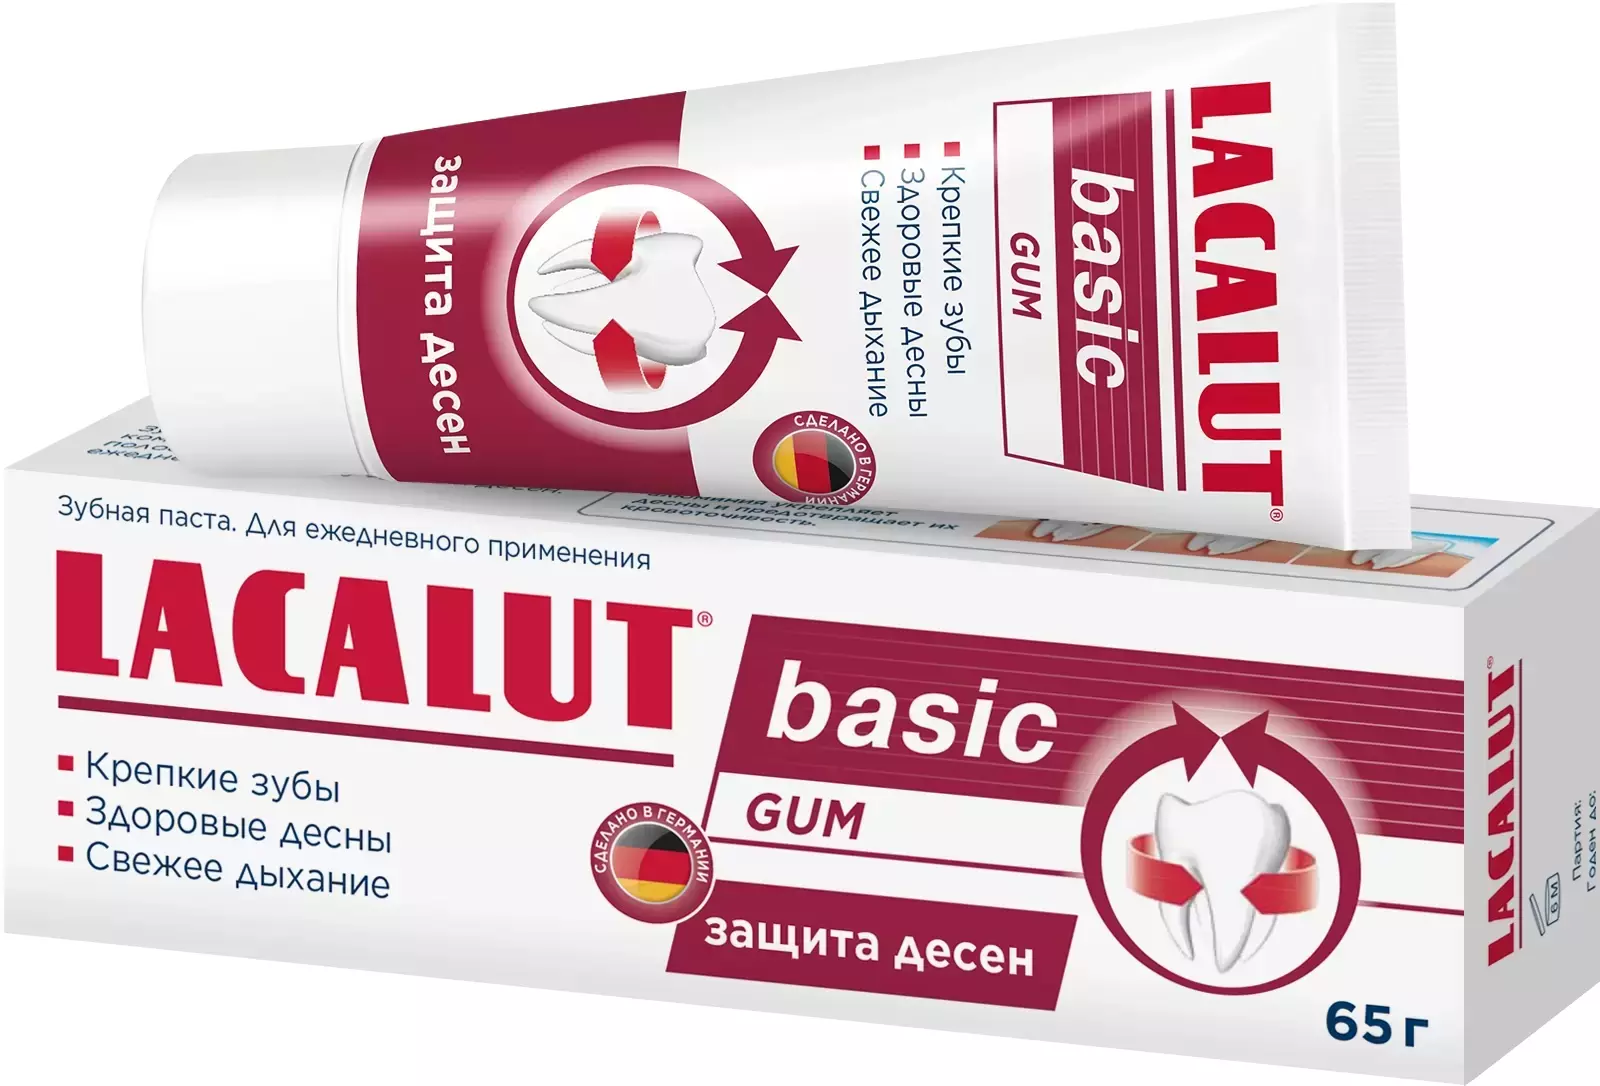 Зубная паста Lacalut basic gum 65мл